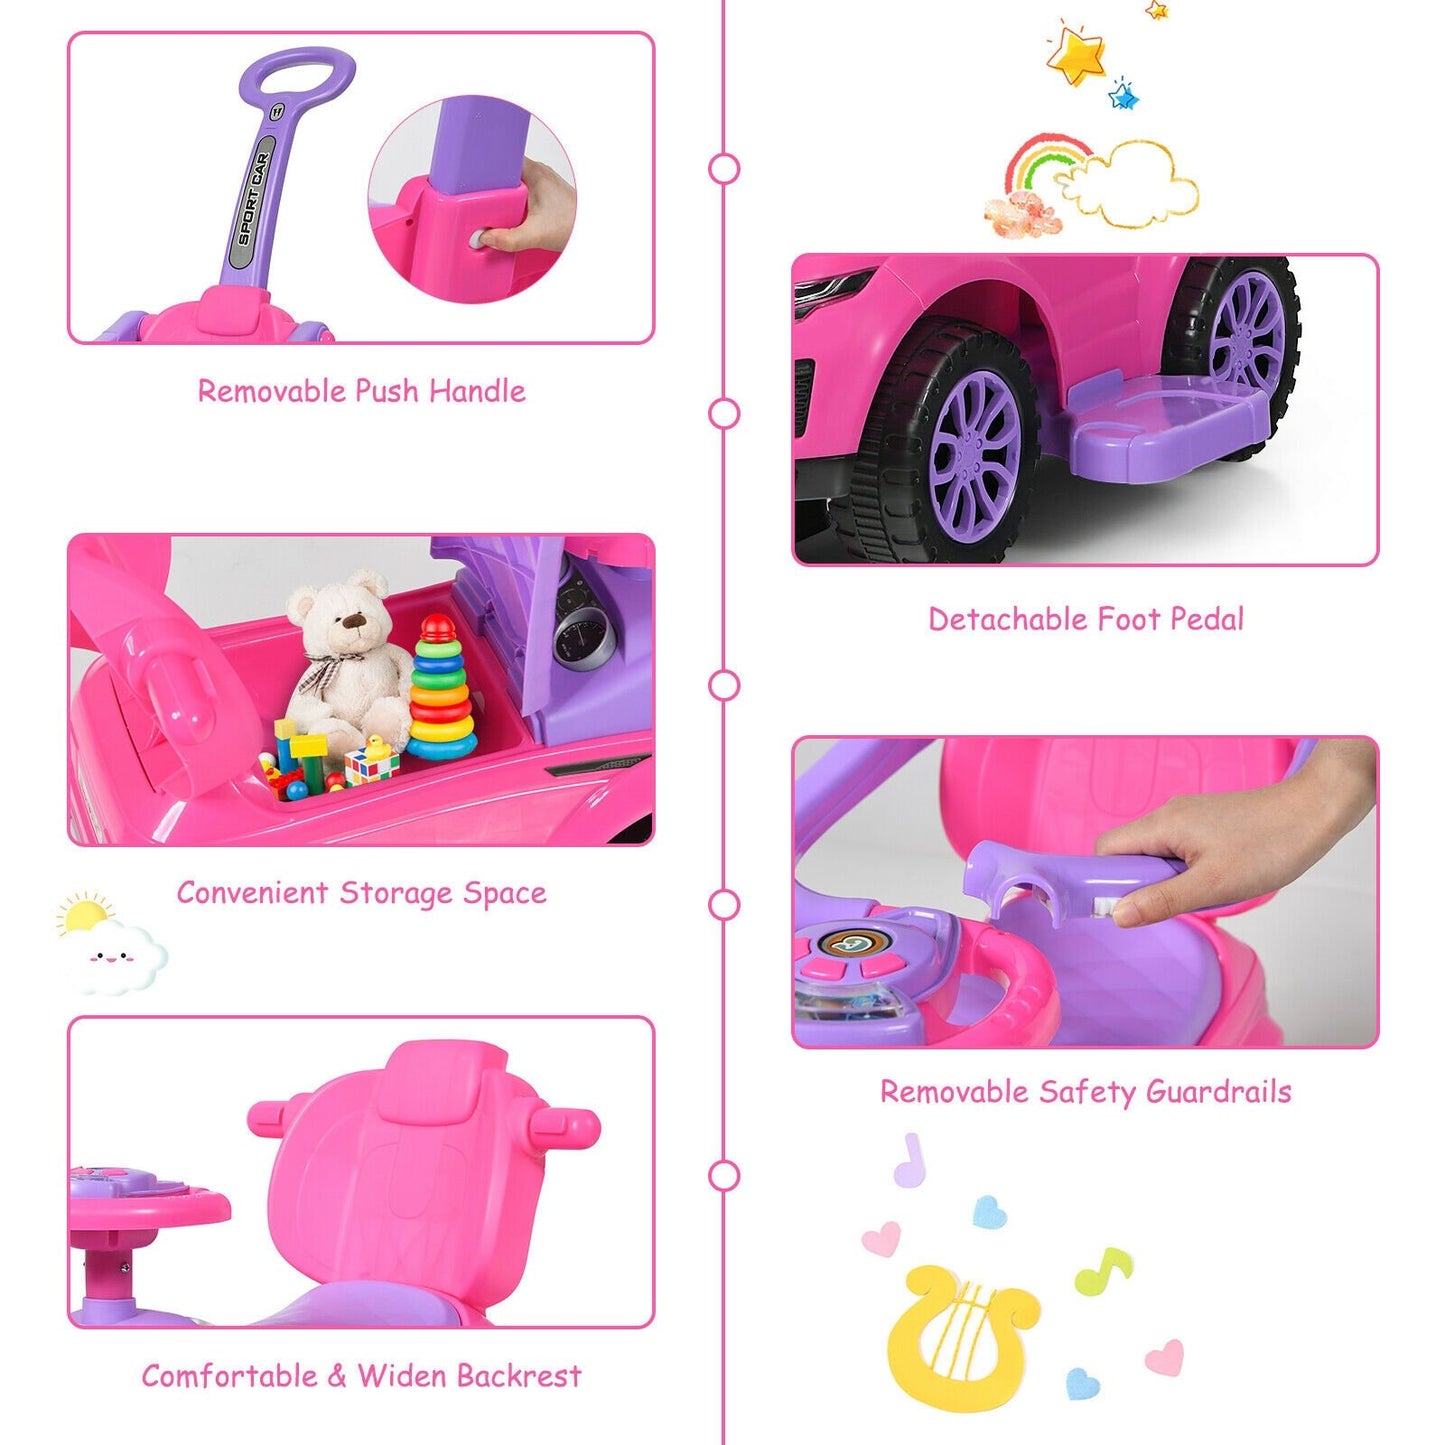 Honey Joy 3 in 1 Ride on Push Car Toddler Stroller Sliding Car with Music, Pink